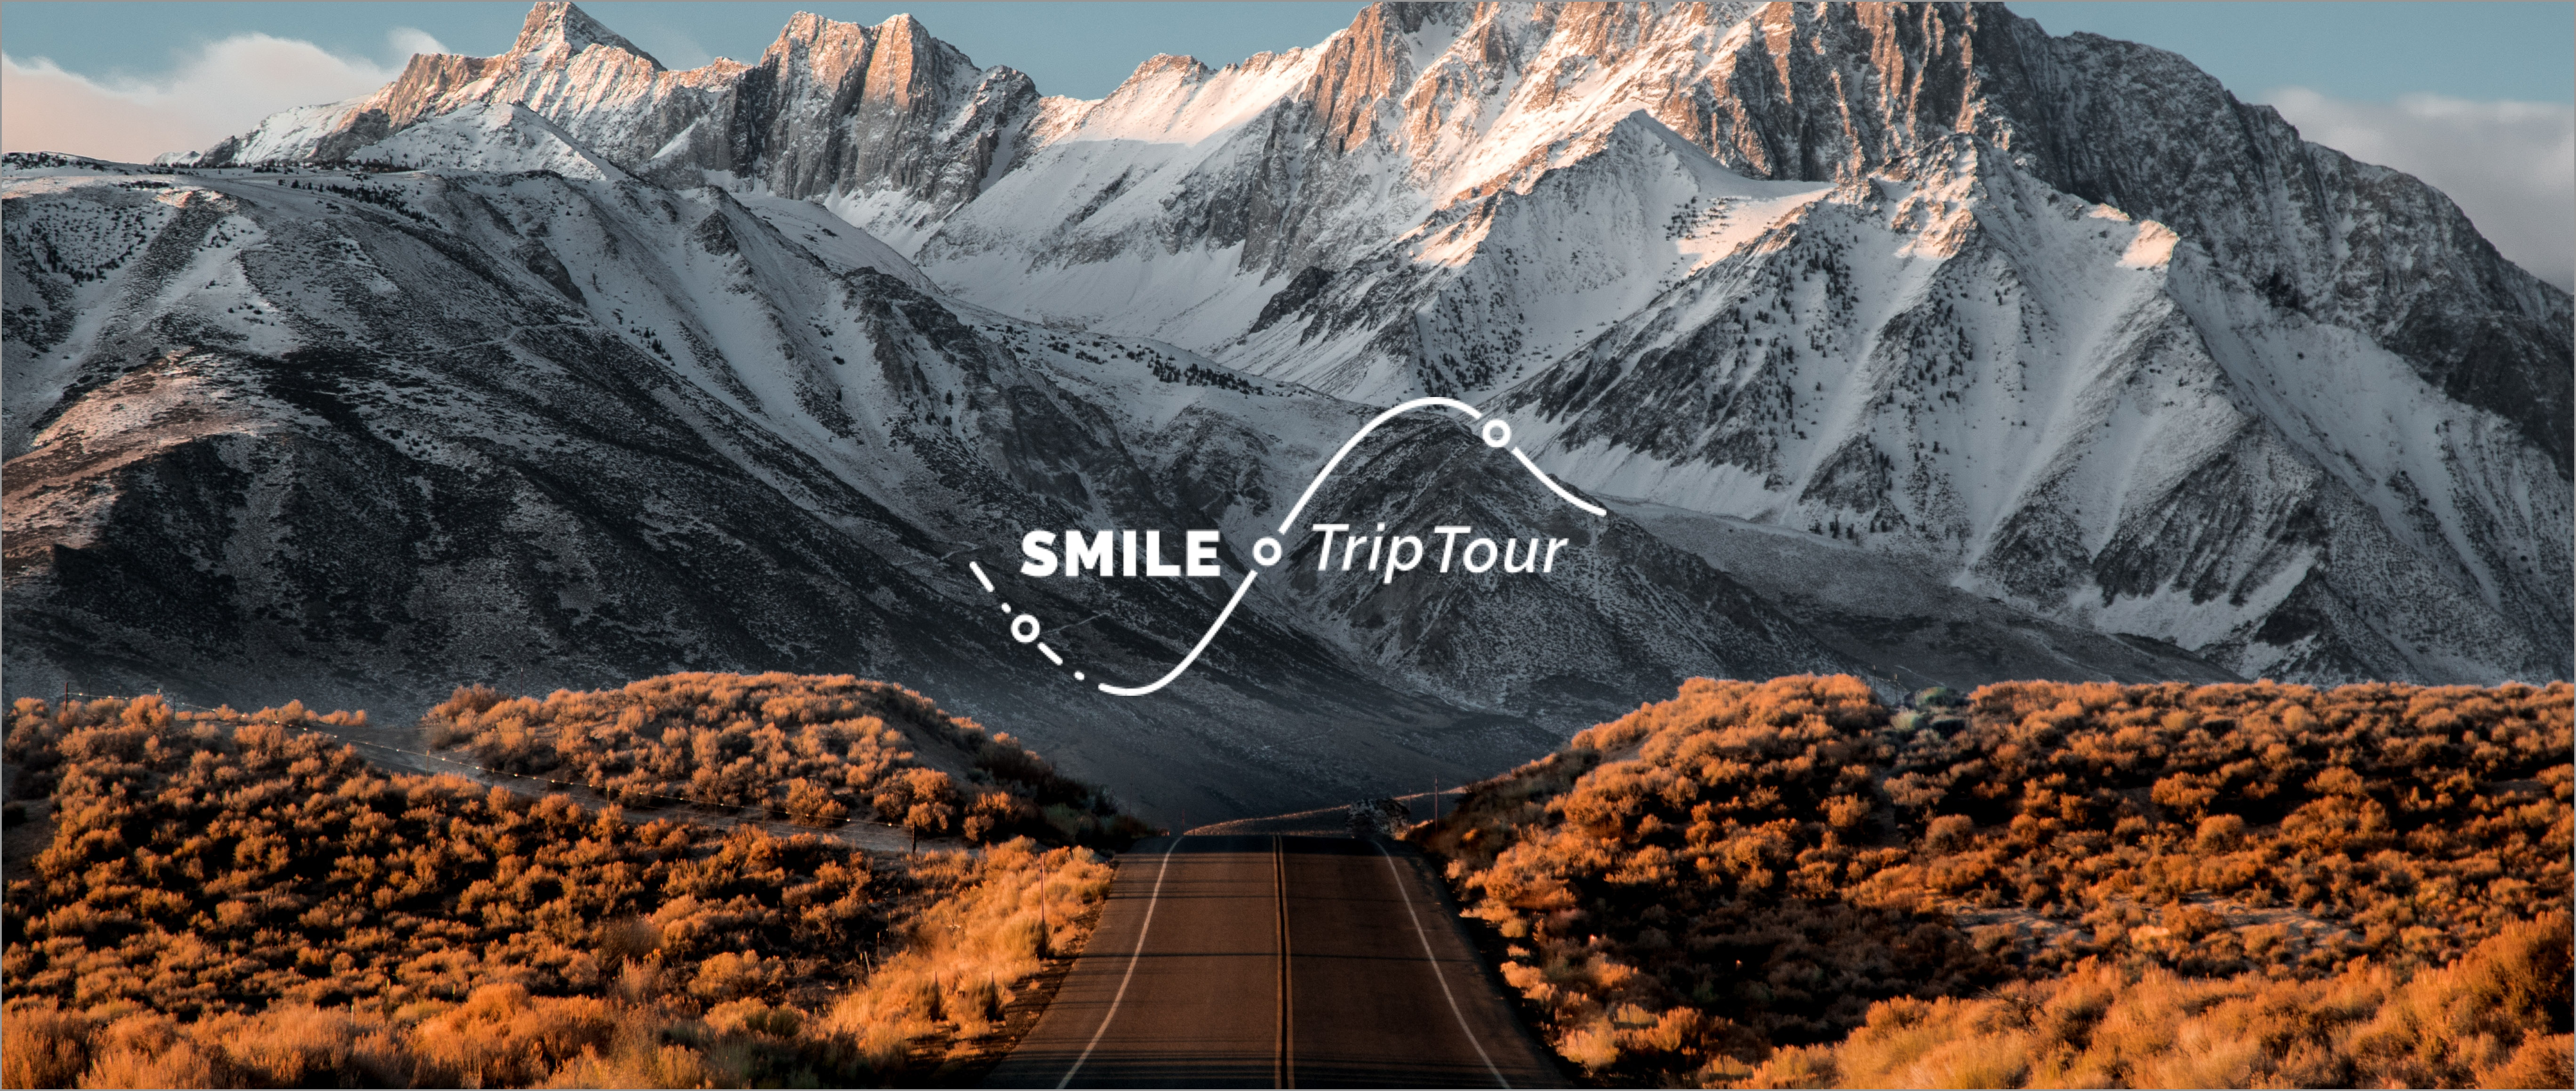 Smile prÃ©sente : le Smile Trip Tour 2018